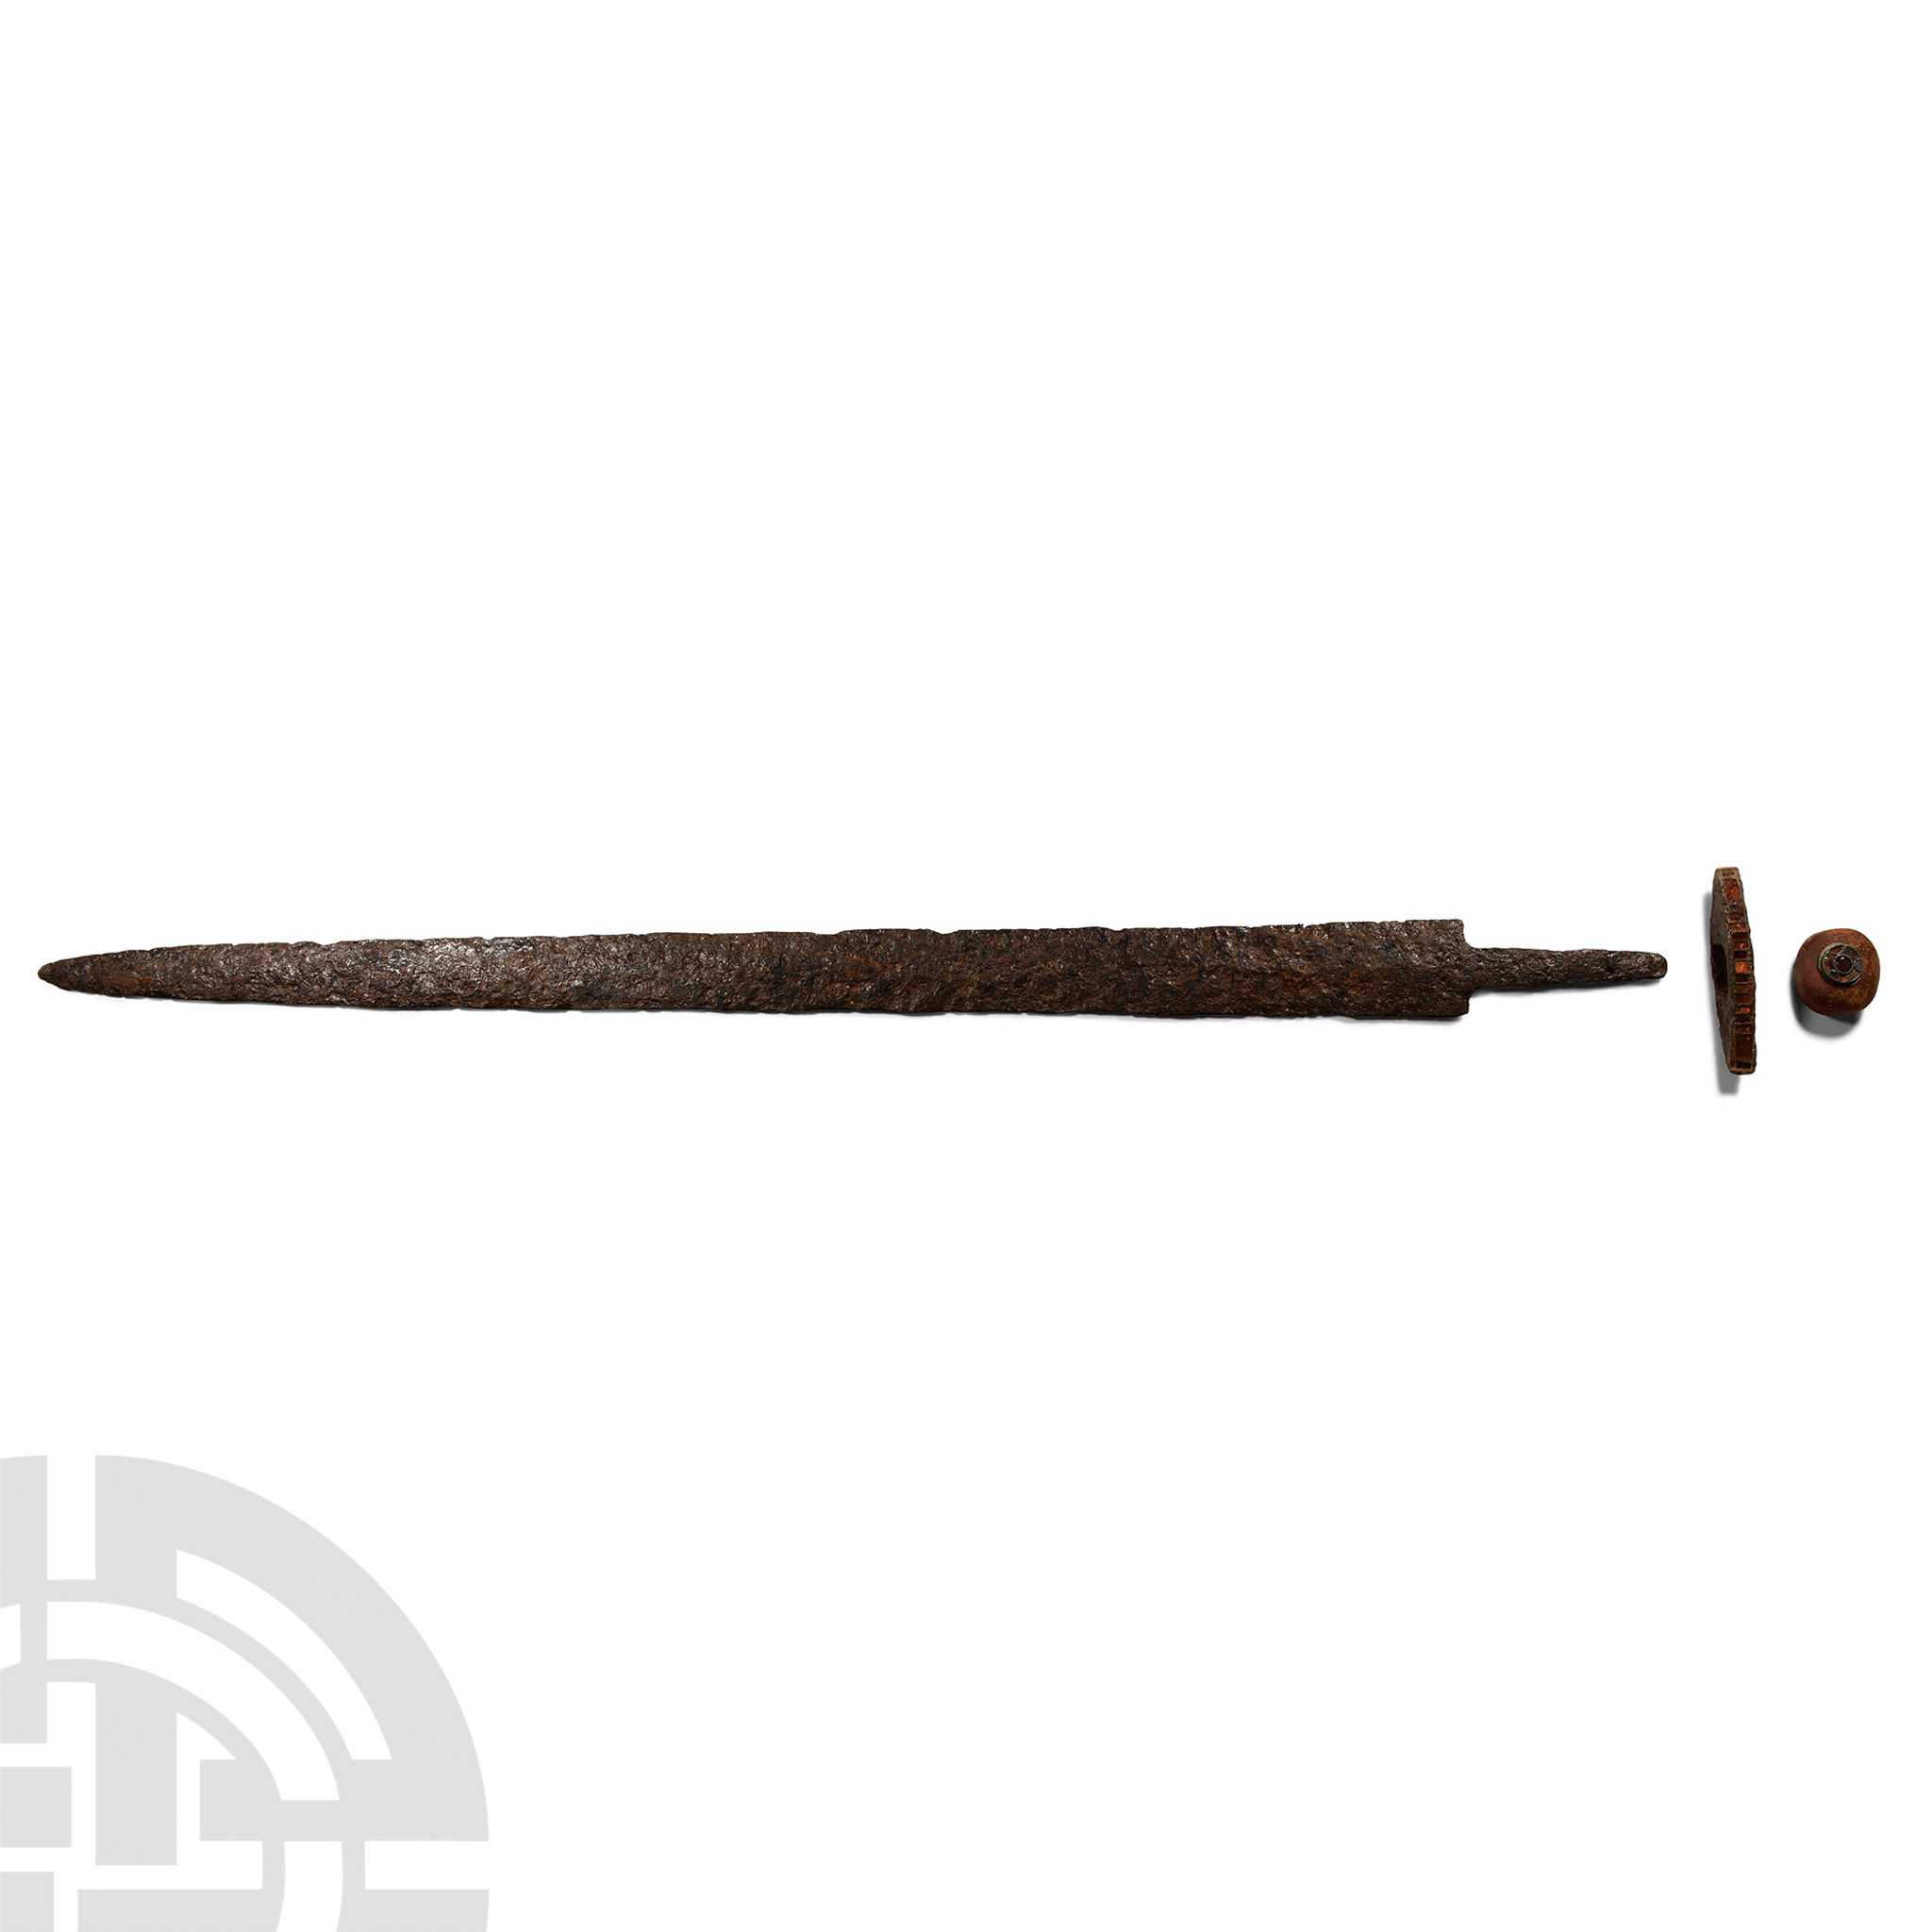 Migration Period Iron Spatha Sword with Garnet Inlaid Hilt - Image 2 of 2